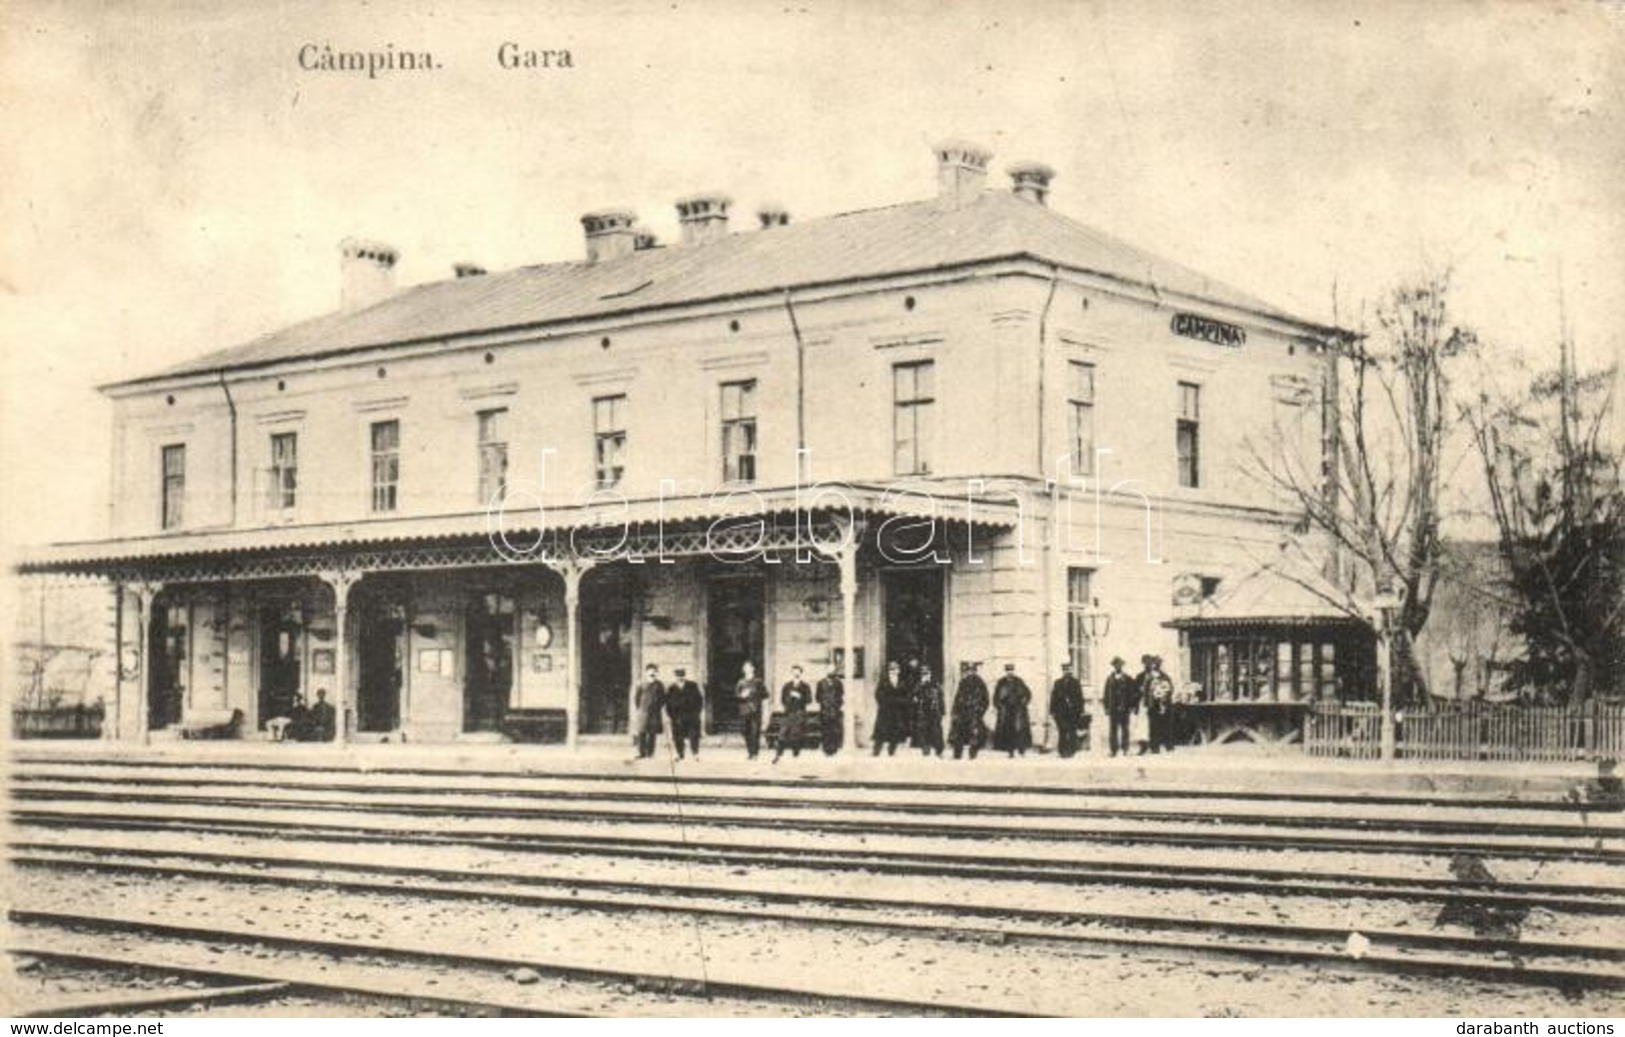 T2/T3 Campina, Gara / Bahnhof / Railway Station - Unclassified